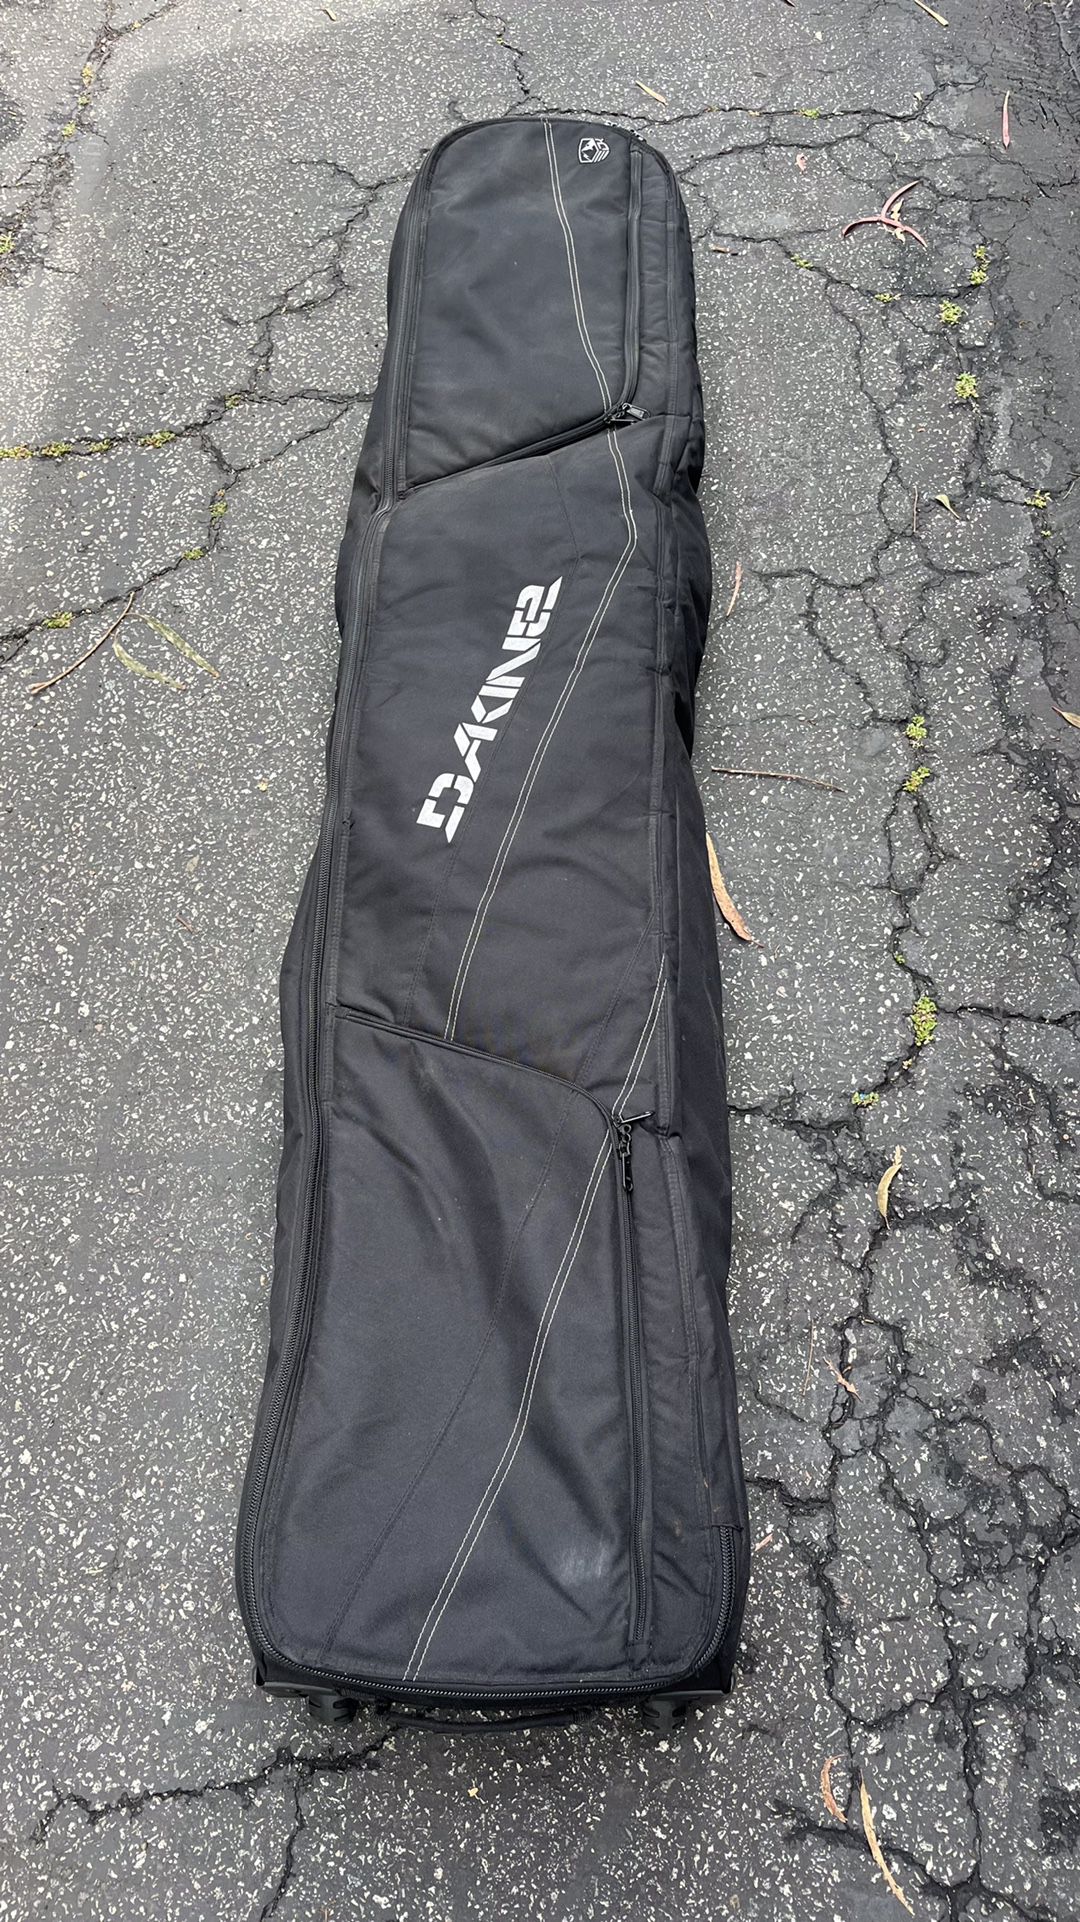 Dakine padded wheelie roller snowboard bag fits up to 165 cm.